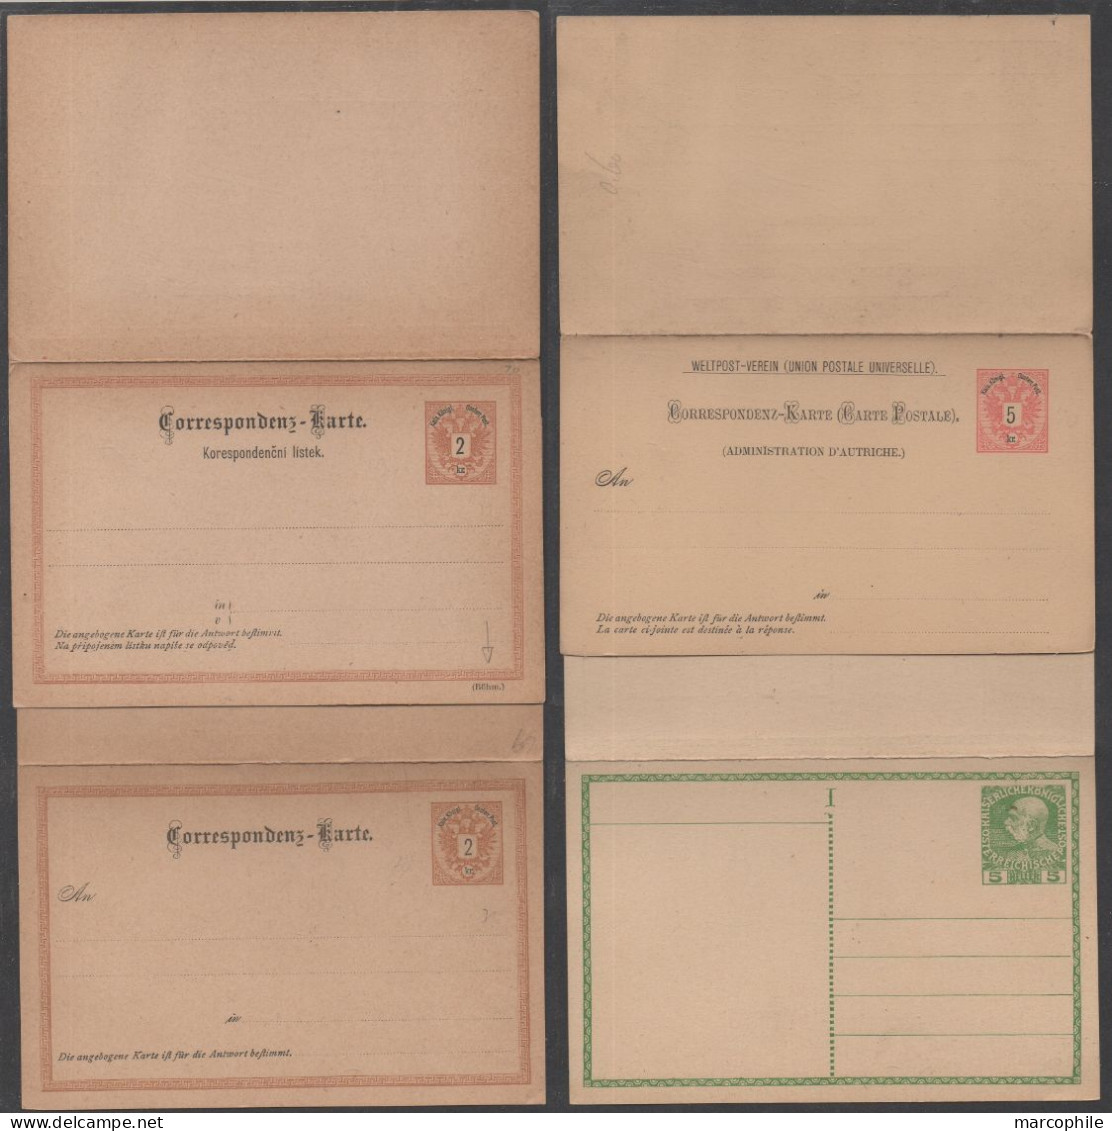 AUTRICHE - ÖSTERREICH / 10 ENTIERS POSTAUX DOUBLES - REPONSE PAYEE / 2 IMAGES (ref 8143) - Postkarten